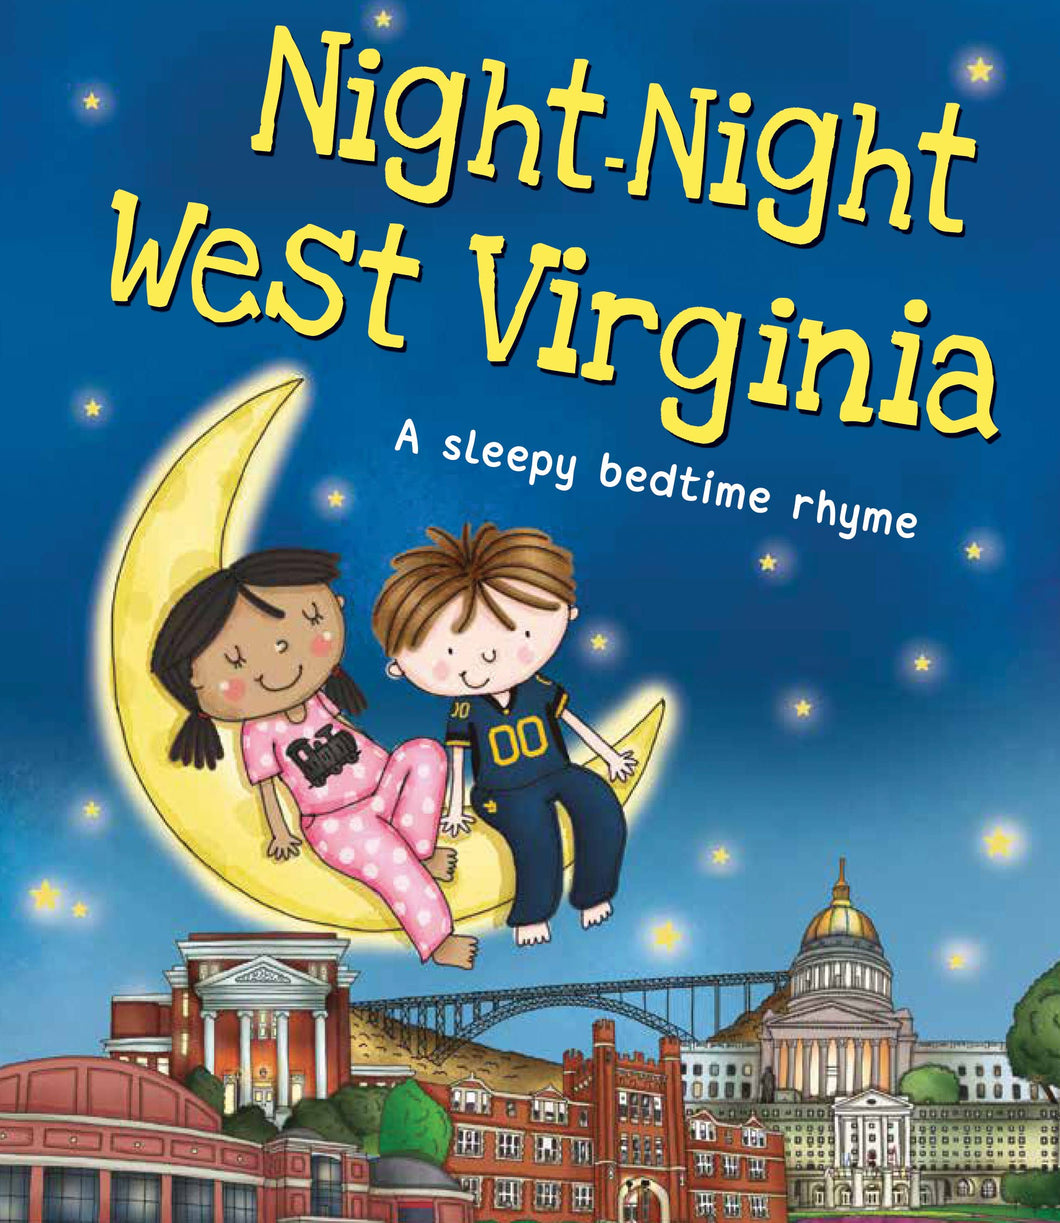 Night-Night West Virginia